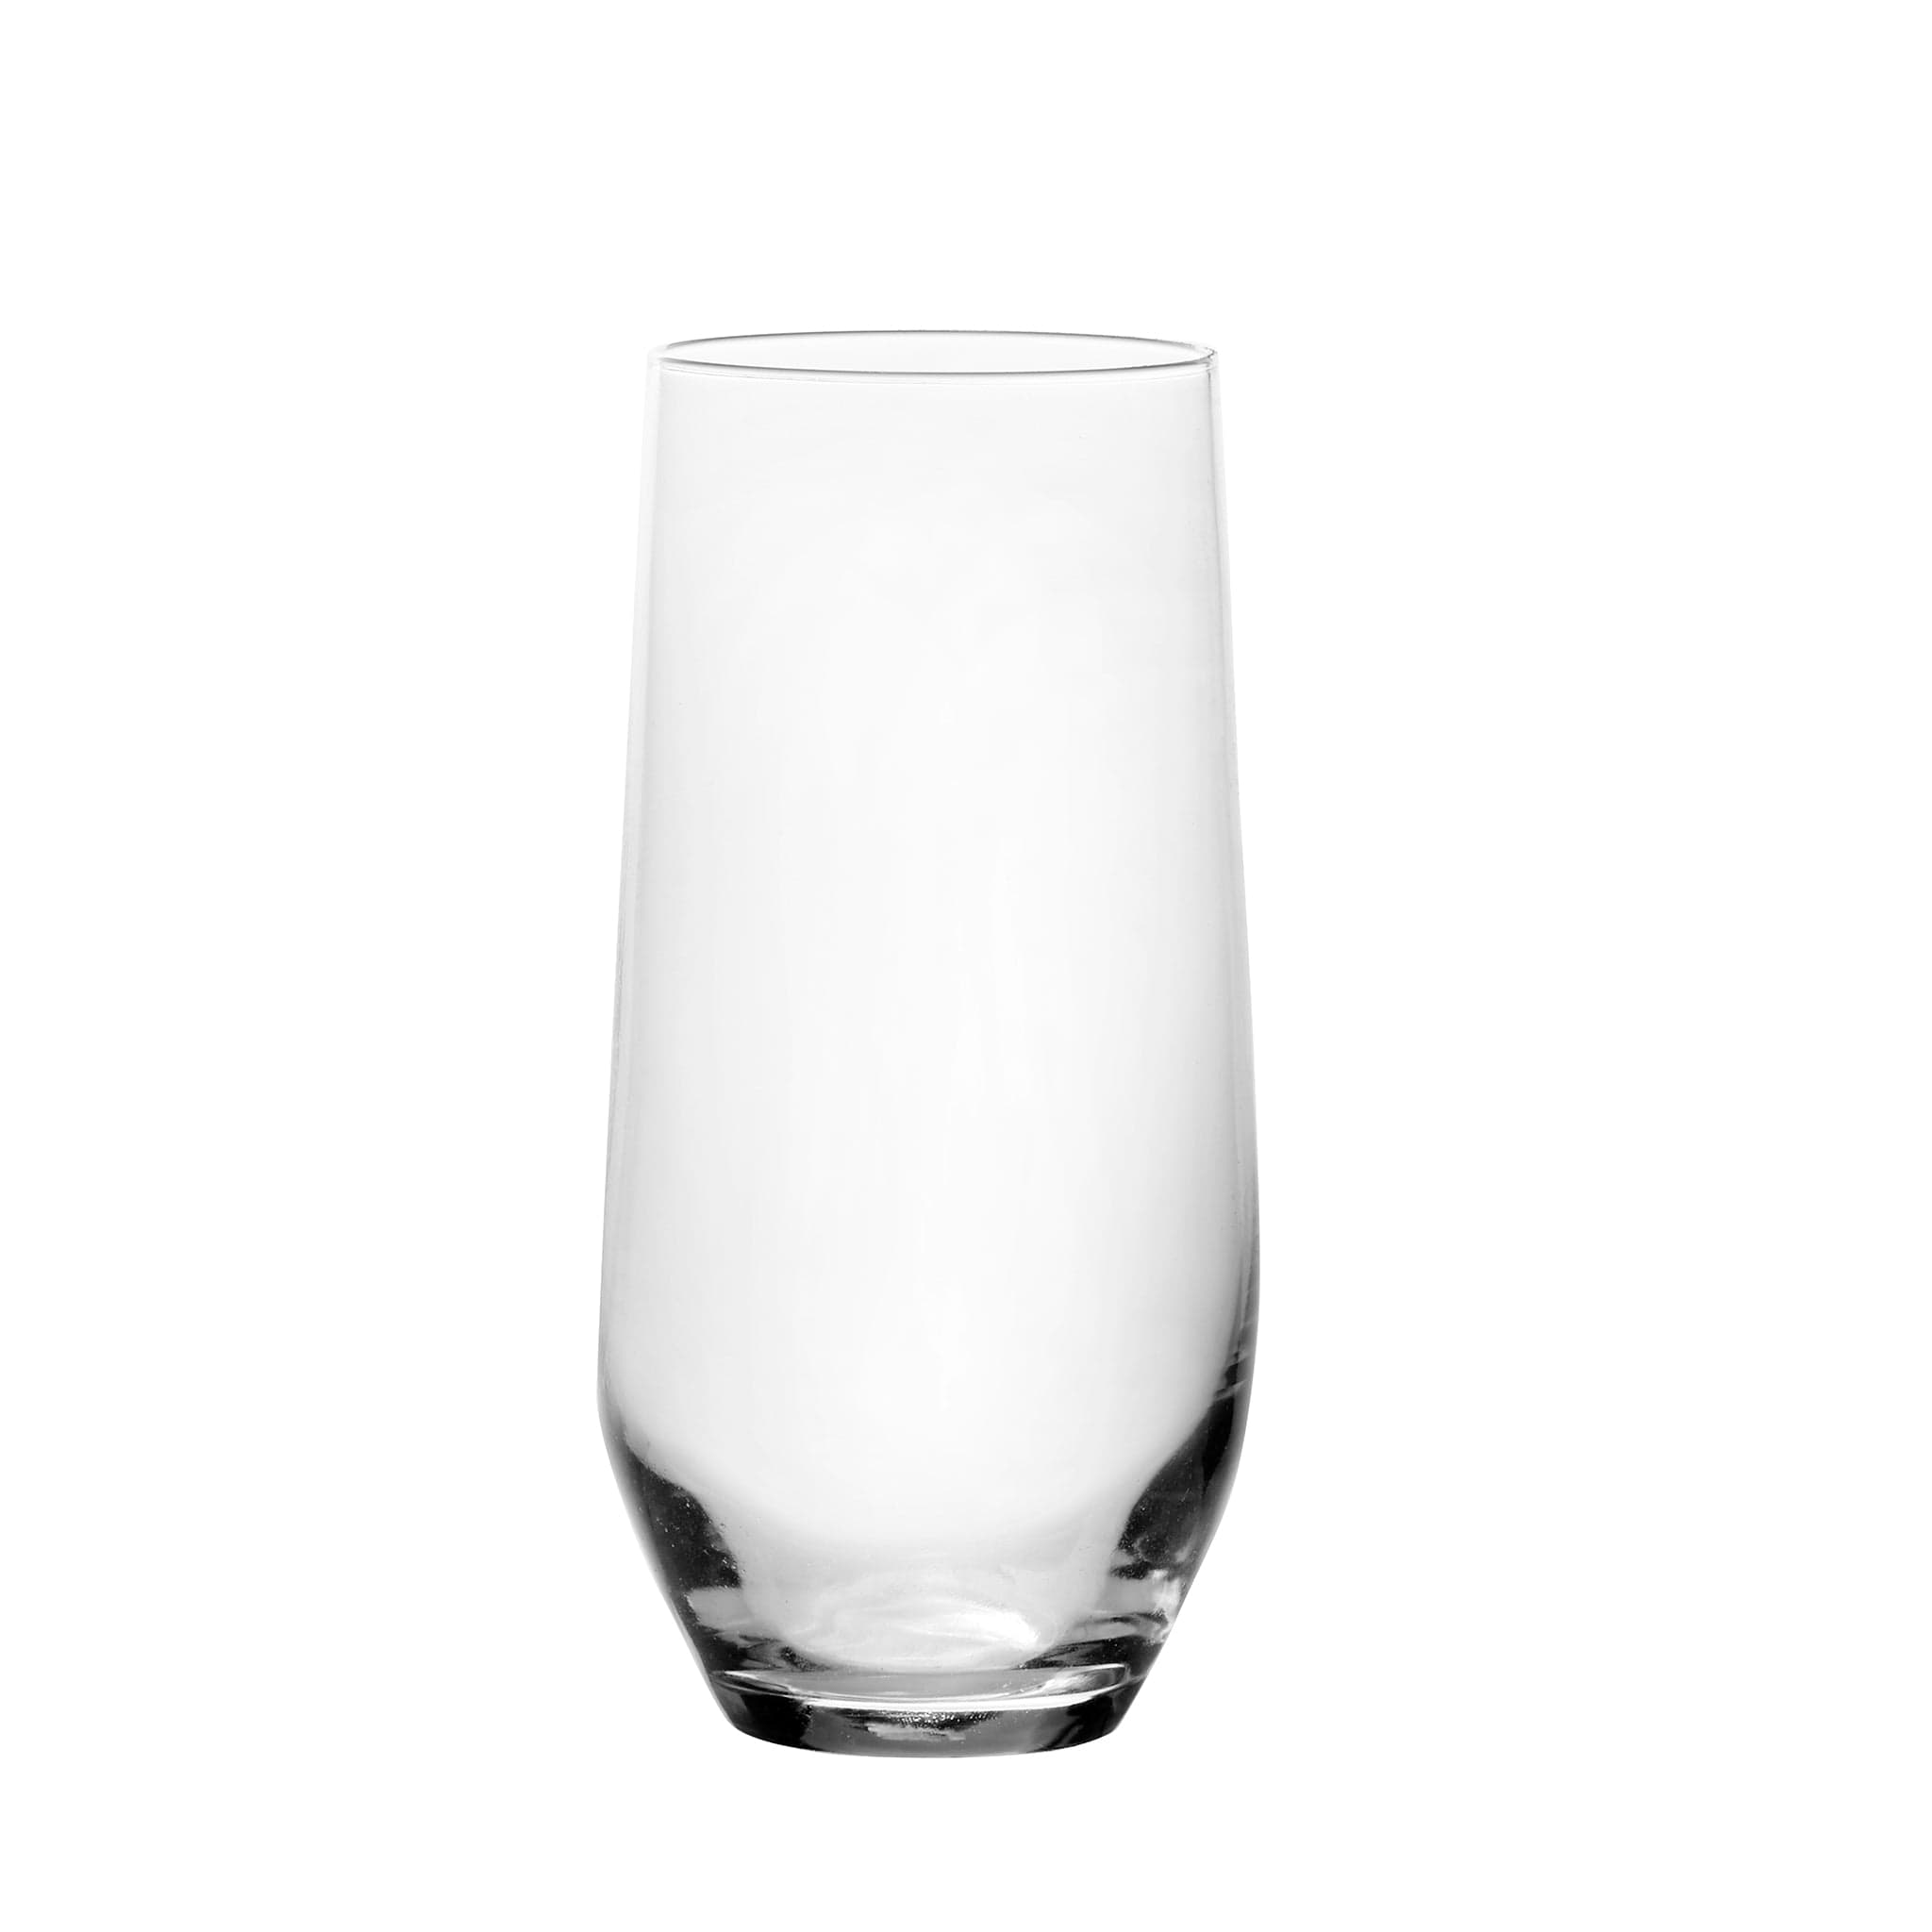 Artemis Crystalline Whiskey Glass 13.75oz Clear